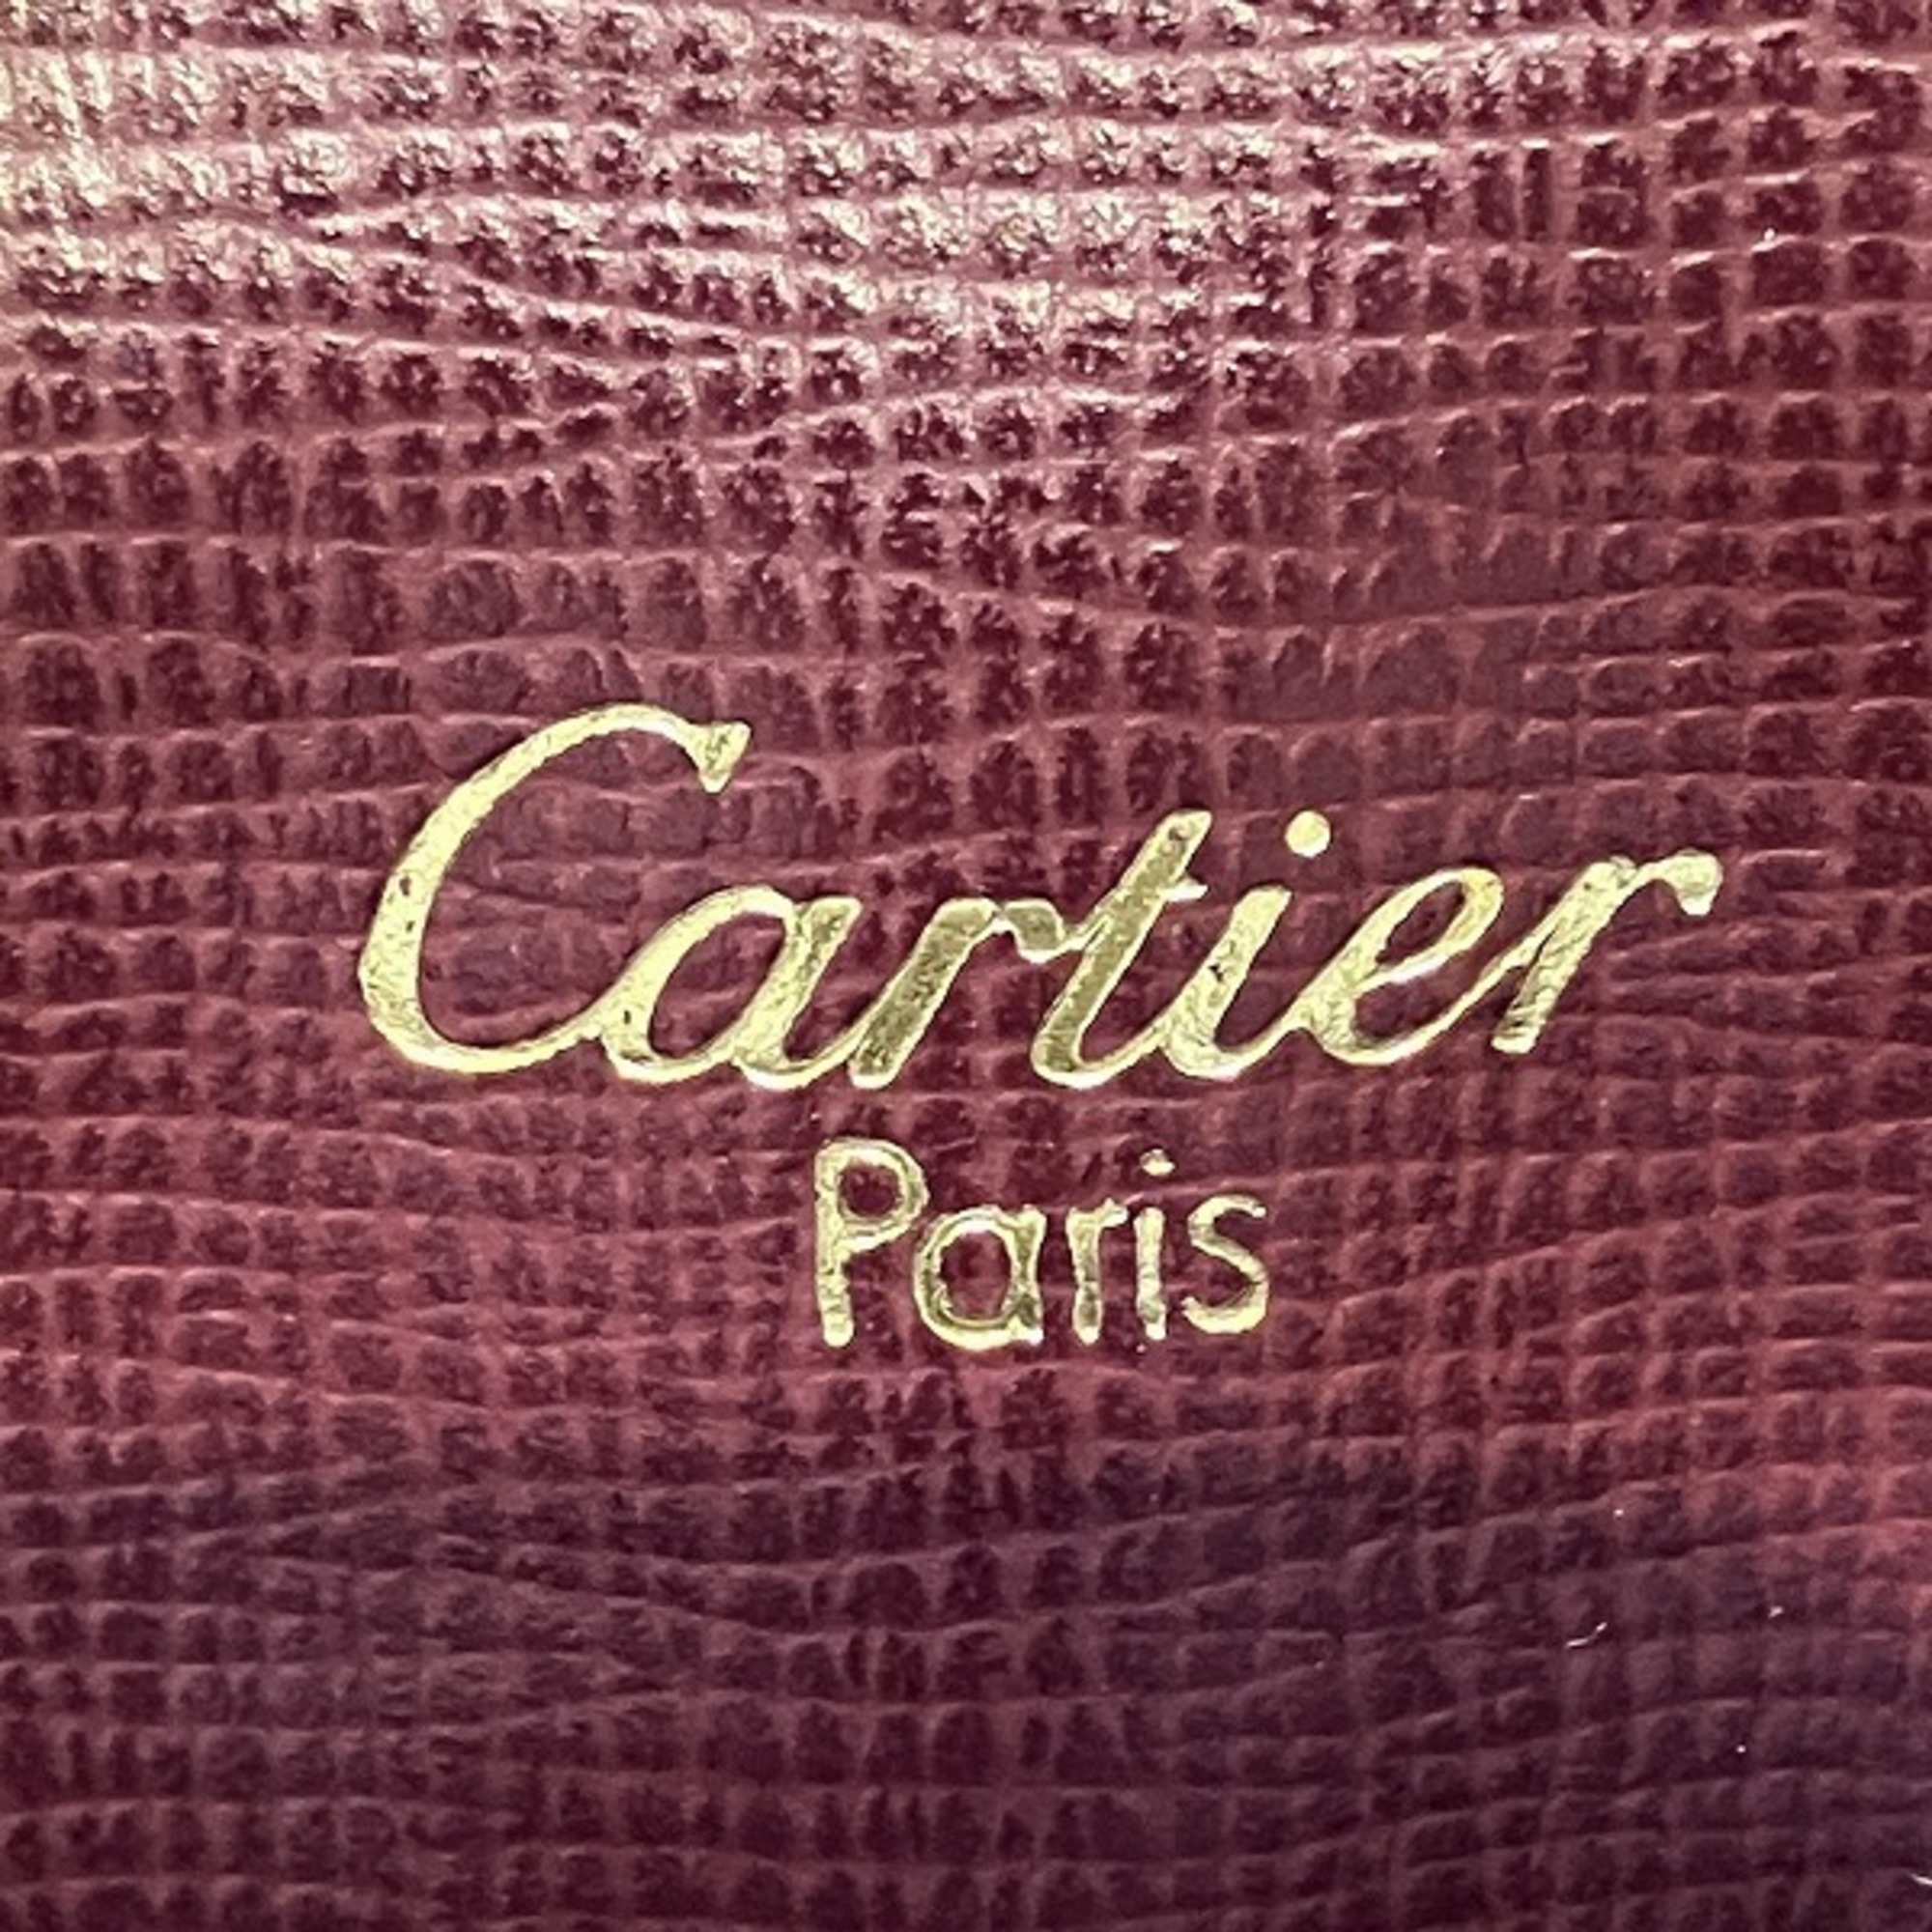 Cartier Must Line Bordeaux Turnlock Bag Shoulder Ladies